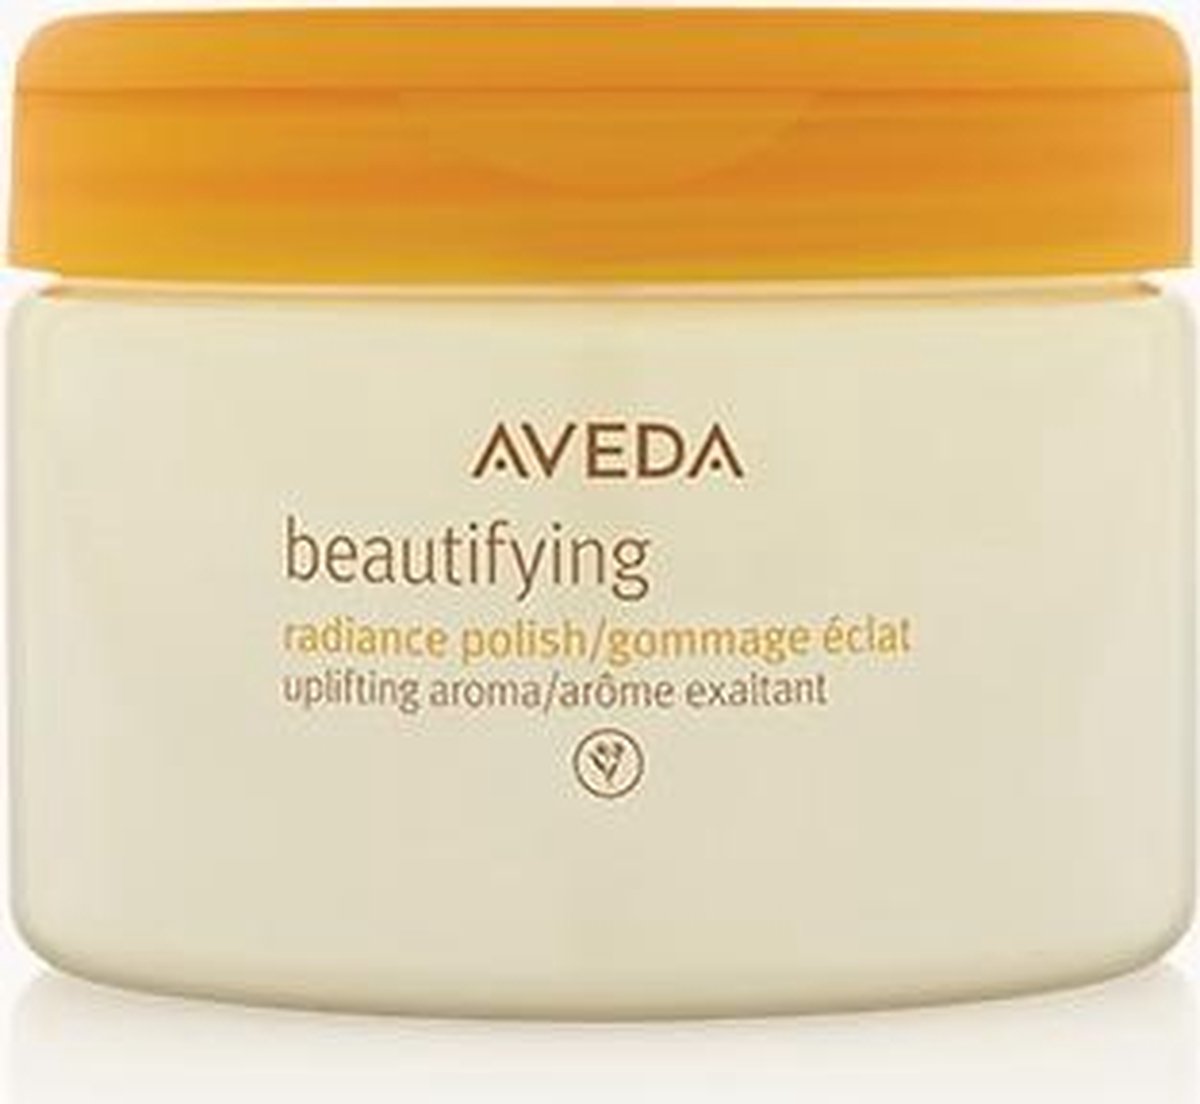 Aveda - Beautifying Body English - Body Scrub